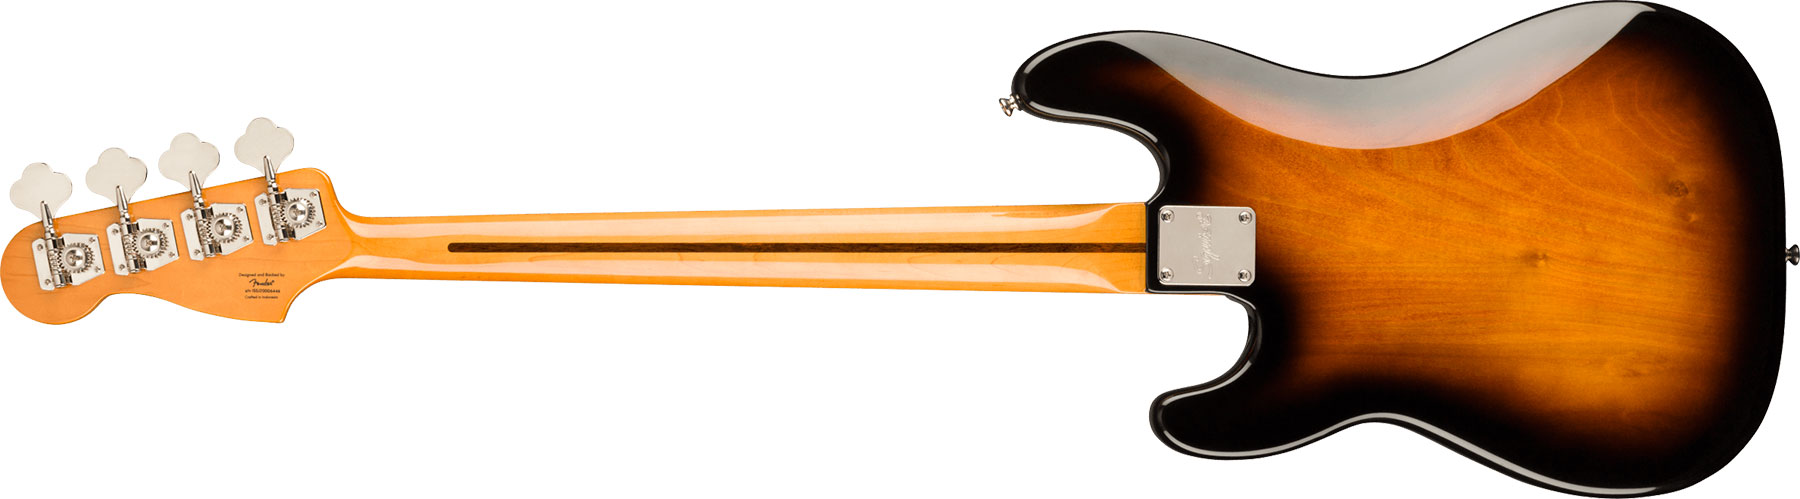 Squier Precision Bass Late '50s Classic Vibe Fsr Ltd Mn - 2-color Sunburst - Solidbody E-bass - Variation 1